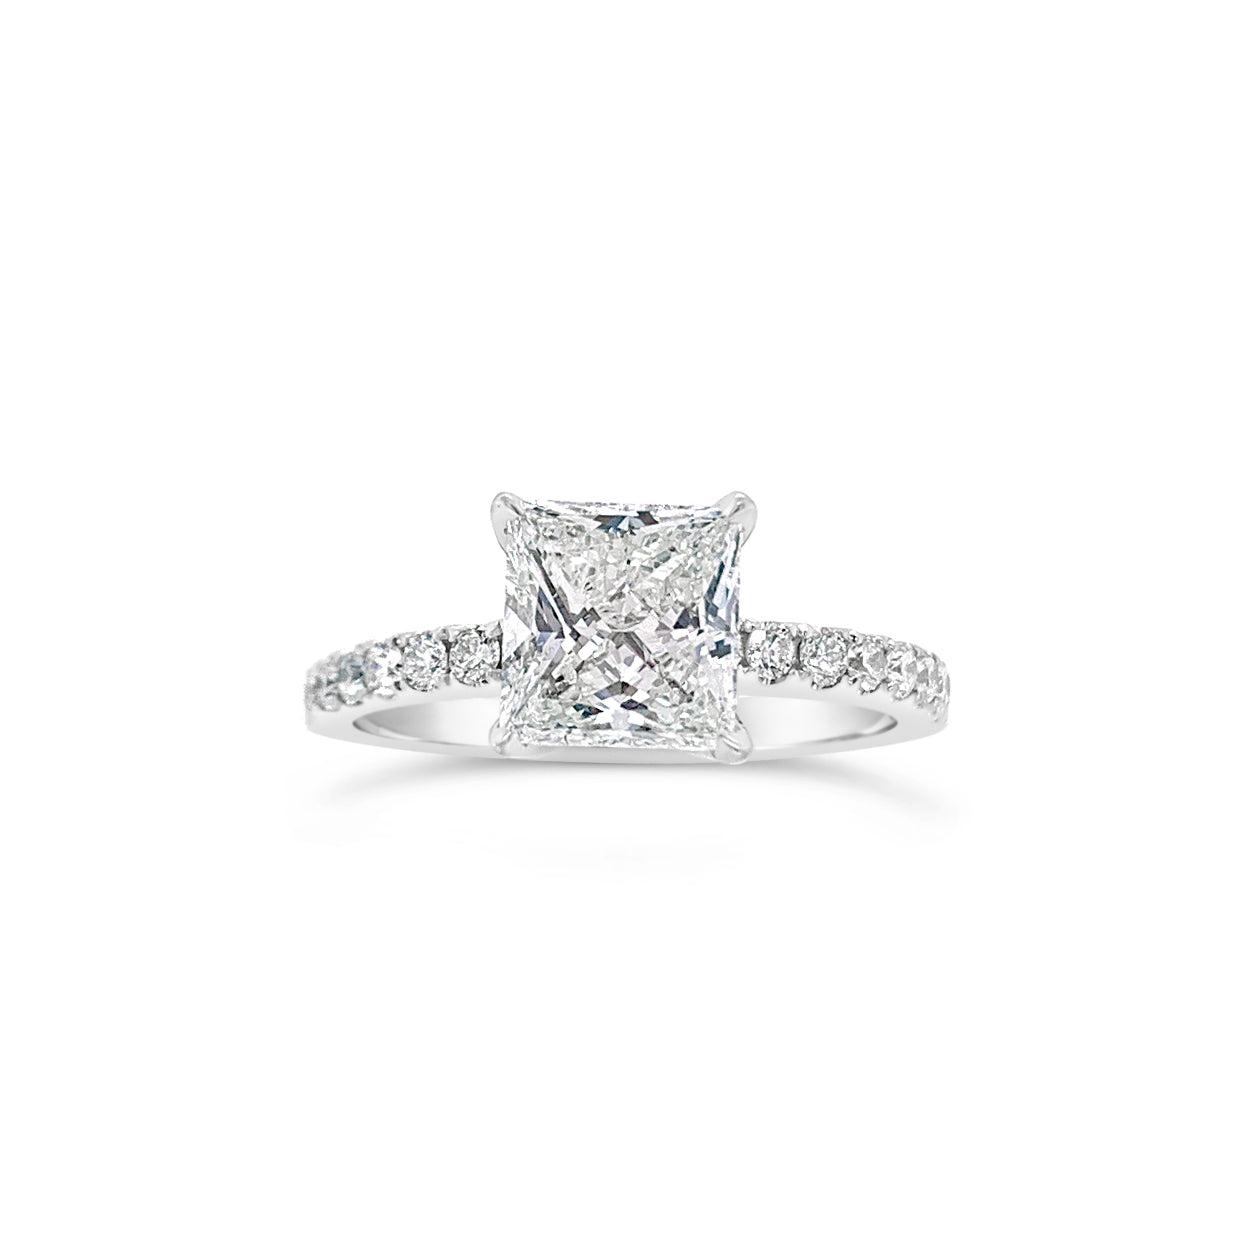 Princess-Cut Diamond Engagement Ring with Diamond Shank  -18K weighting 3.90 GR  - 16 round diamonds totaling 0.35 carats